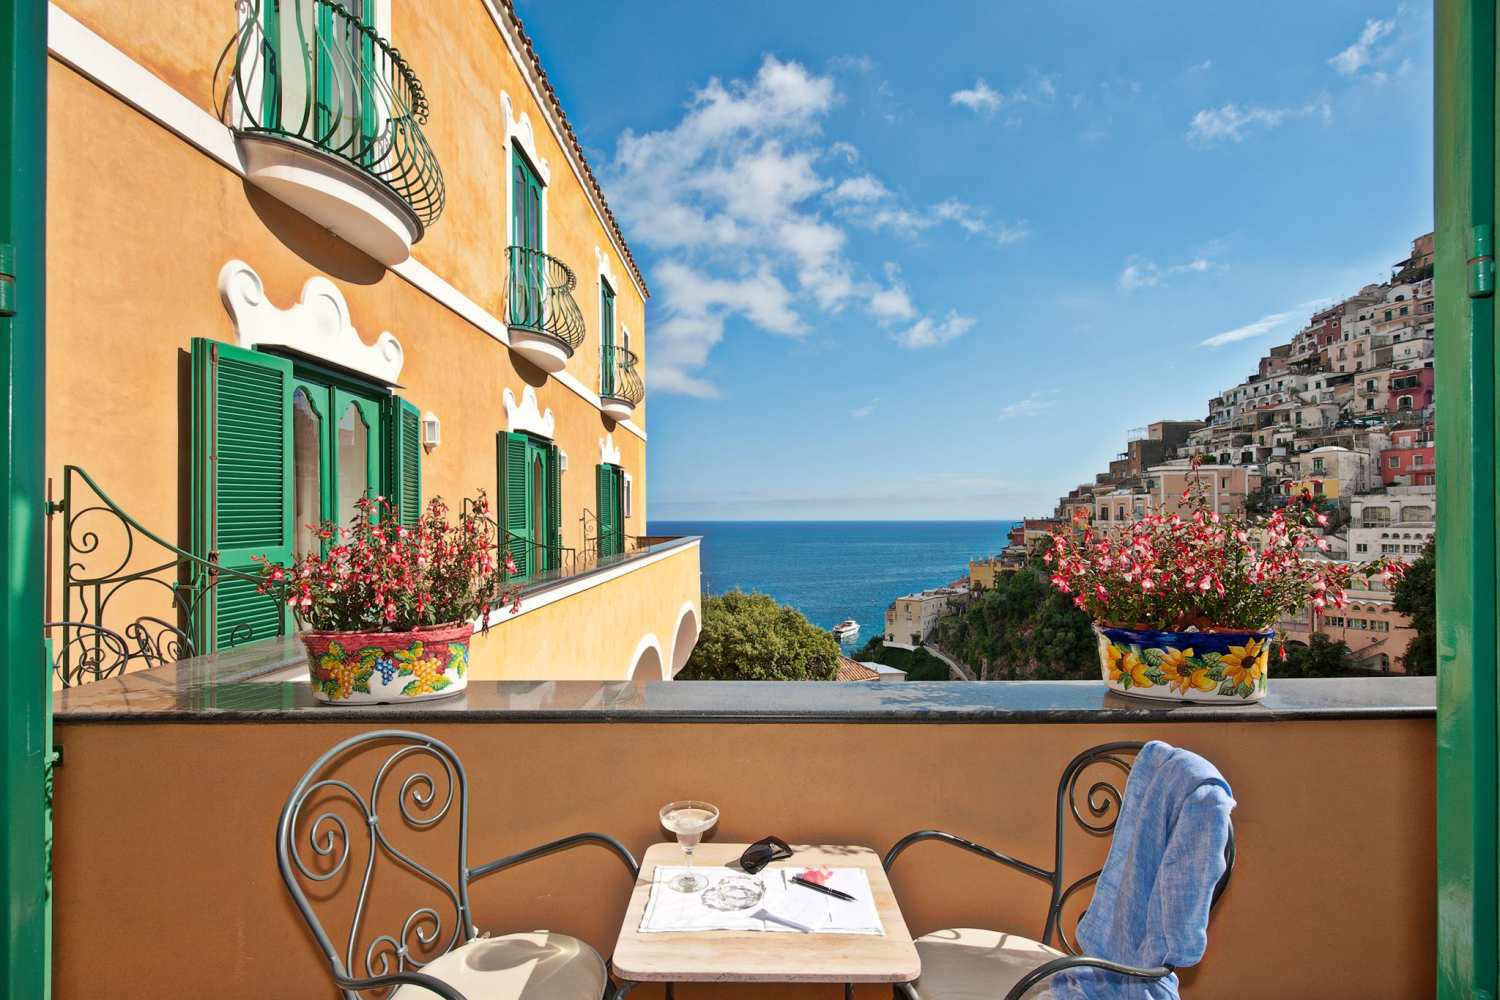 Hotel Savoia Positano, Amalfi Coast - Italy